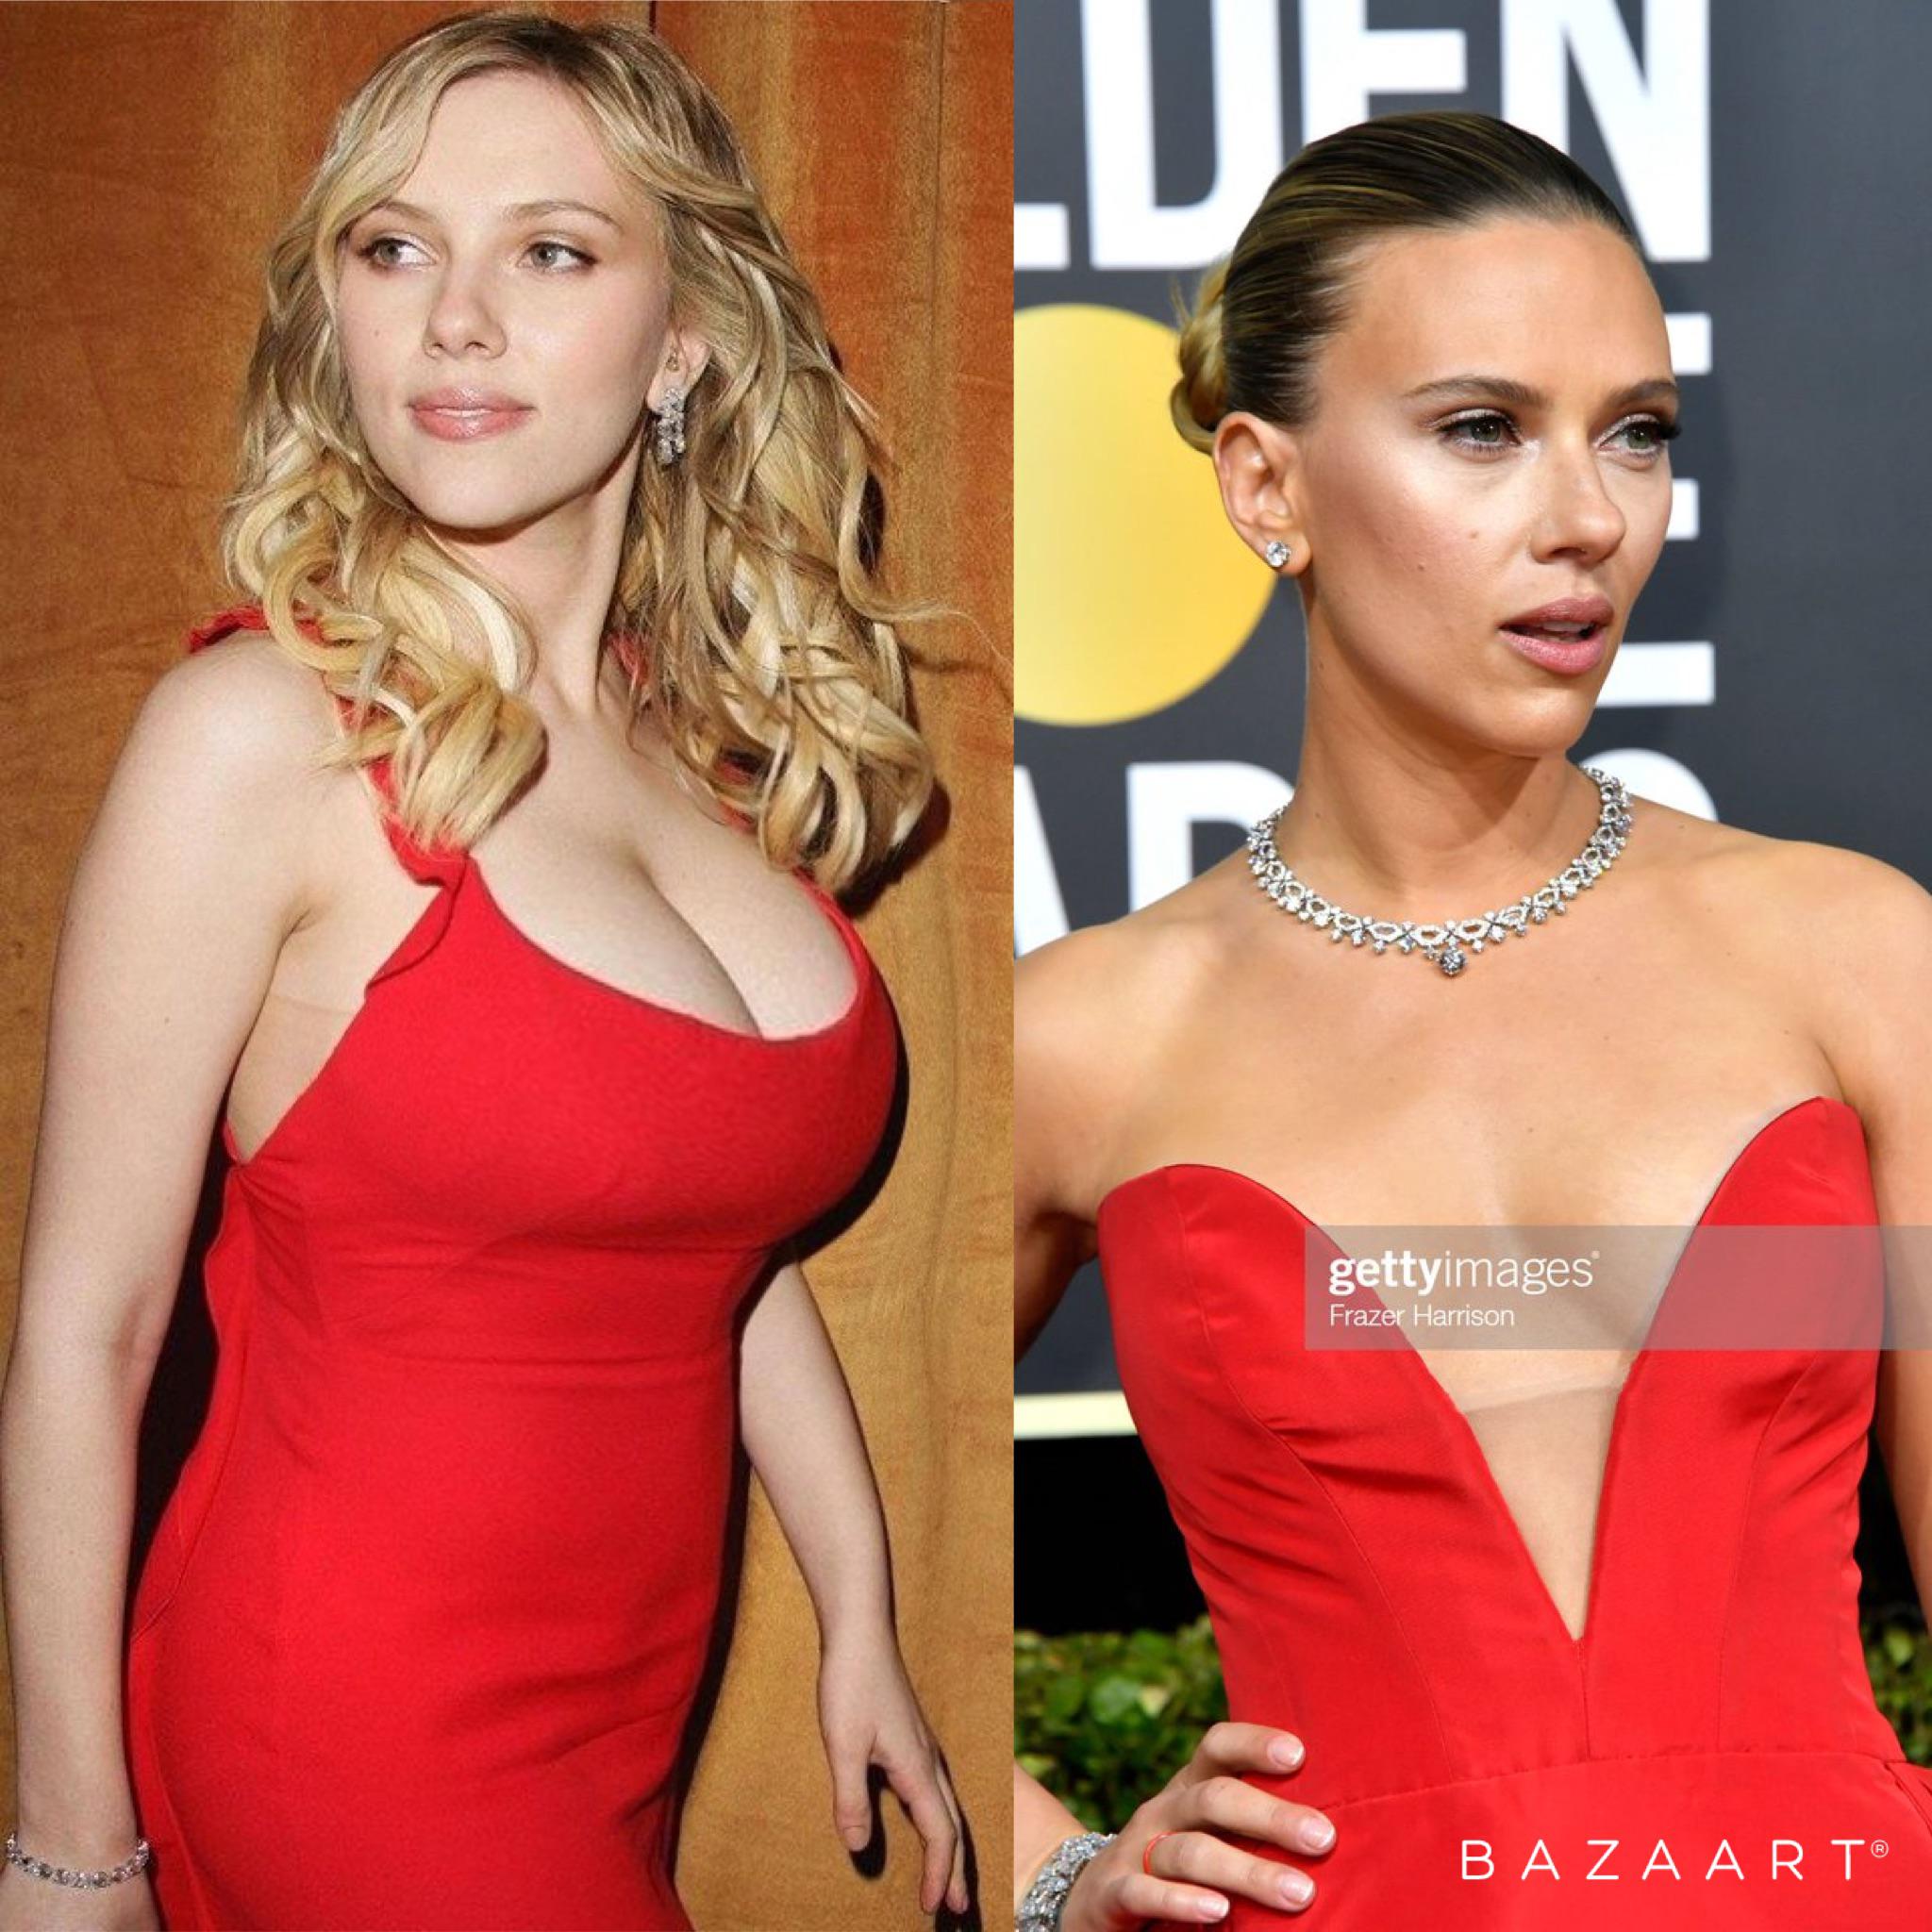 Scarlett Johansson - Do you guys prefer bigger or skinny? 5